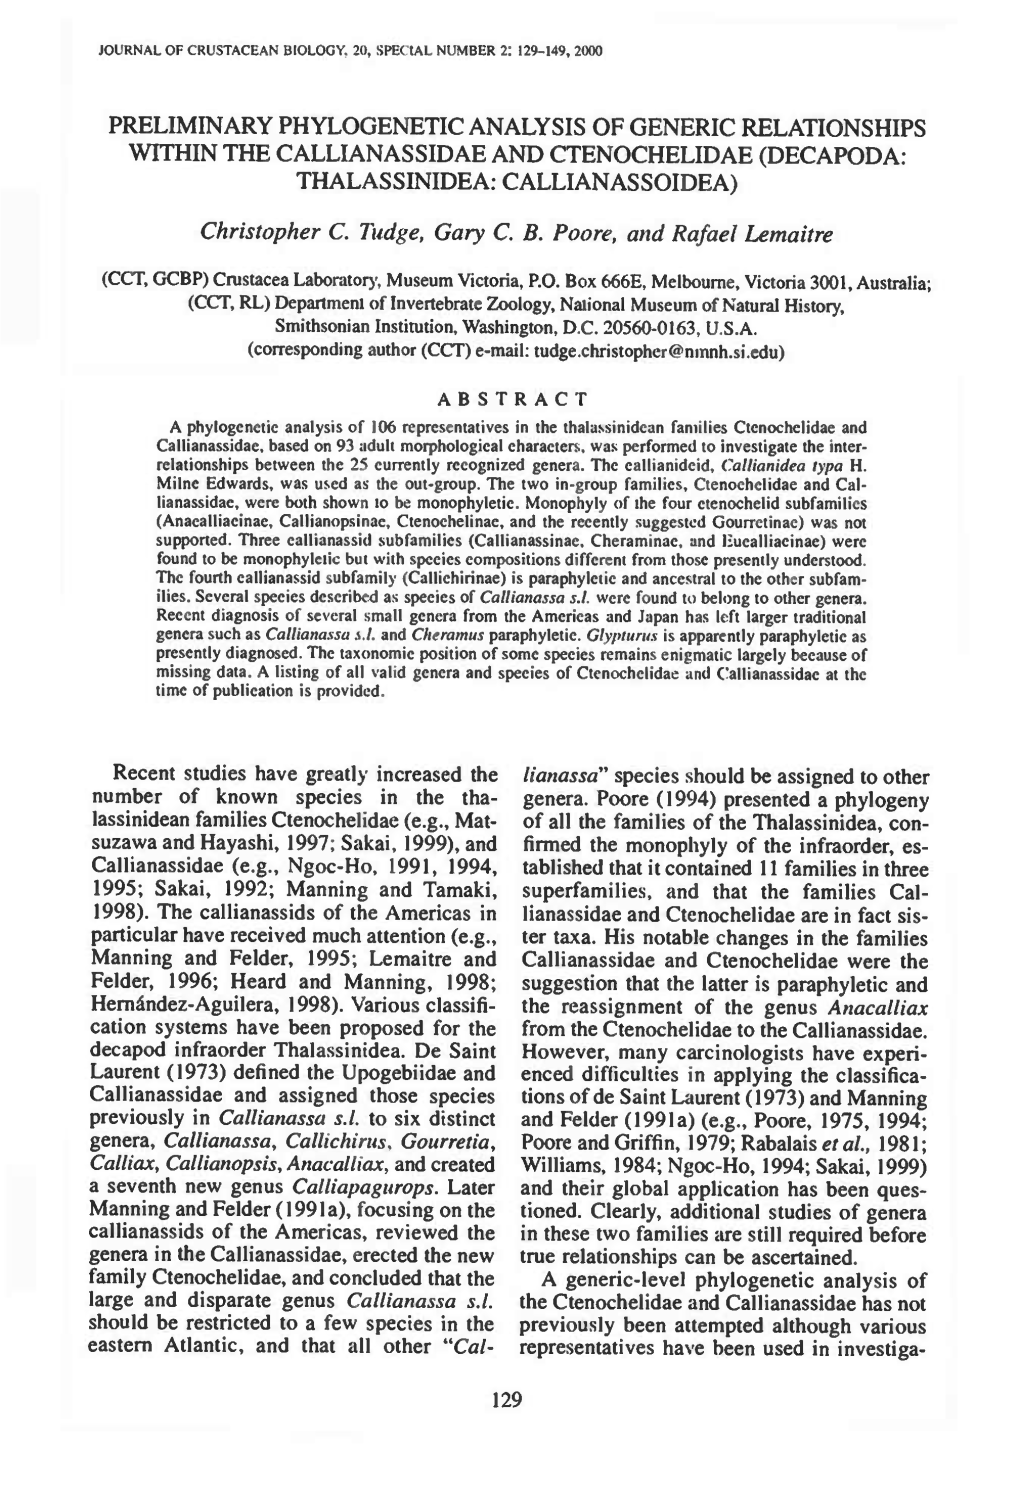 Preliminary Phylogenetic Analysis of Generic Relationships Within the Callianassidae and Ctenochelidae (Decapoda: Thalassinidea: Callianassoidea)